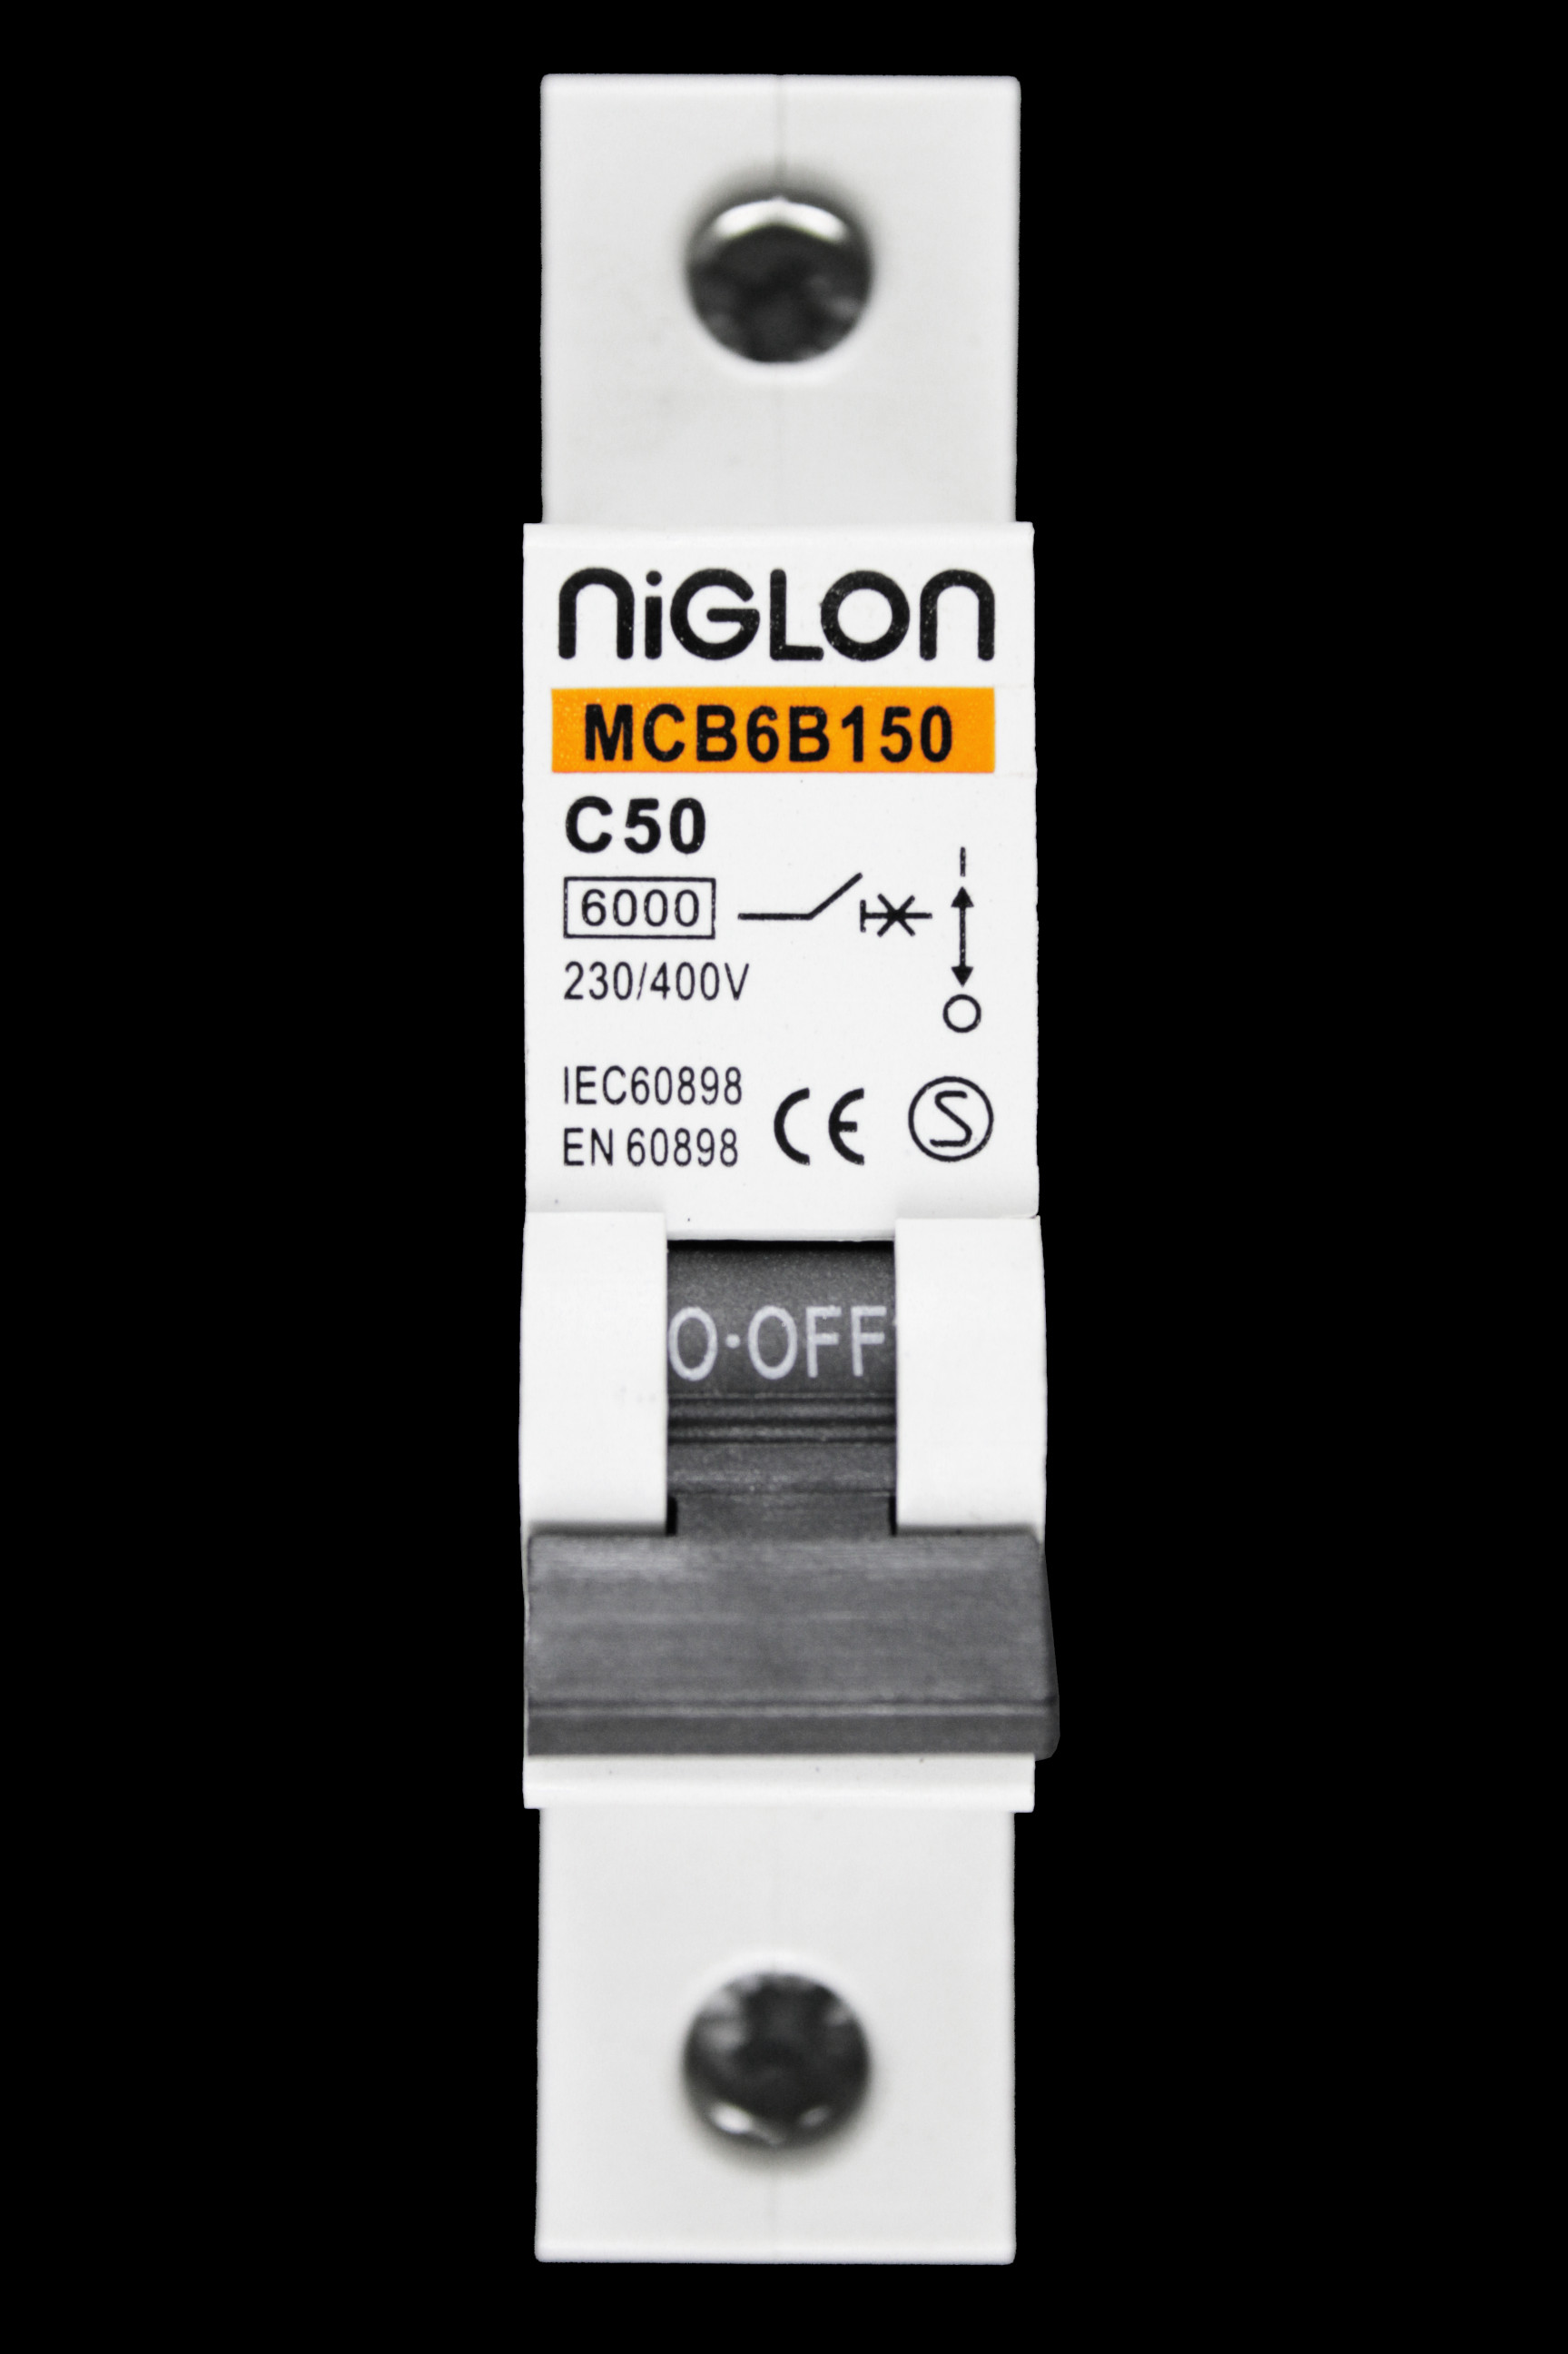 NIGLON 50 AMP CURVE C 6kA MCB CIRCUIT BREAKER MCB6B150